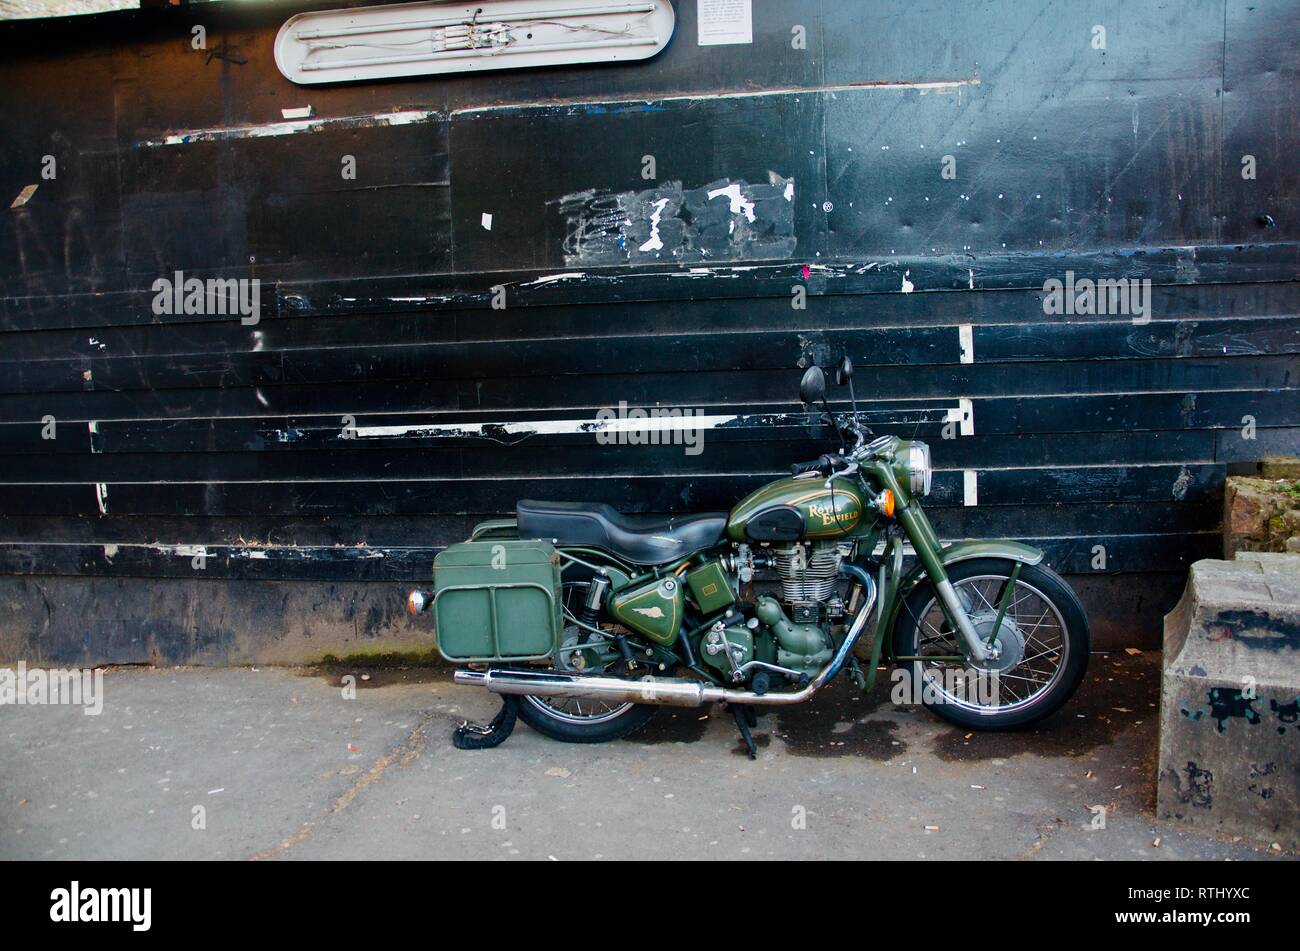 Royal Enfield Bullet 500 military motorcycle parked against dark metal wall, London, UK Stock Photo